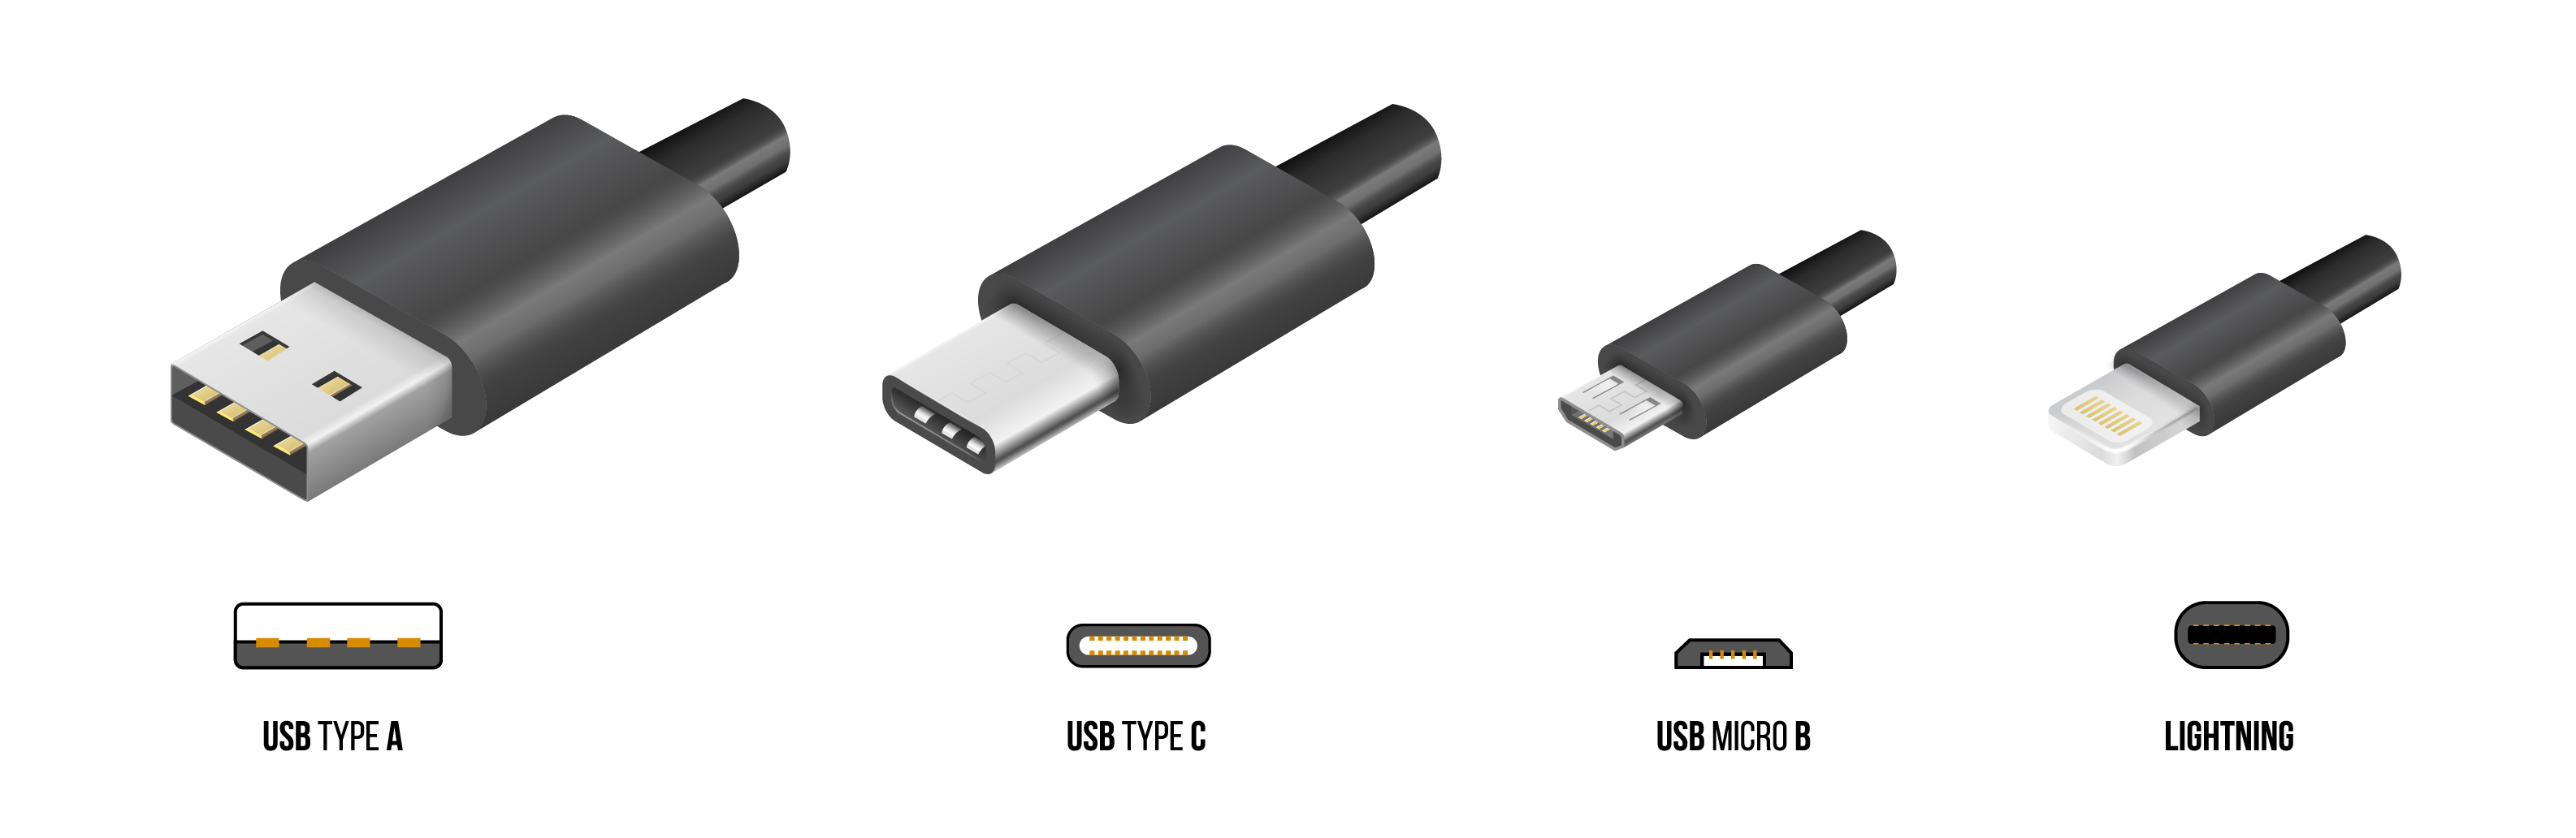 USB Type A, USB Type C, Micro USB, and Lighting